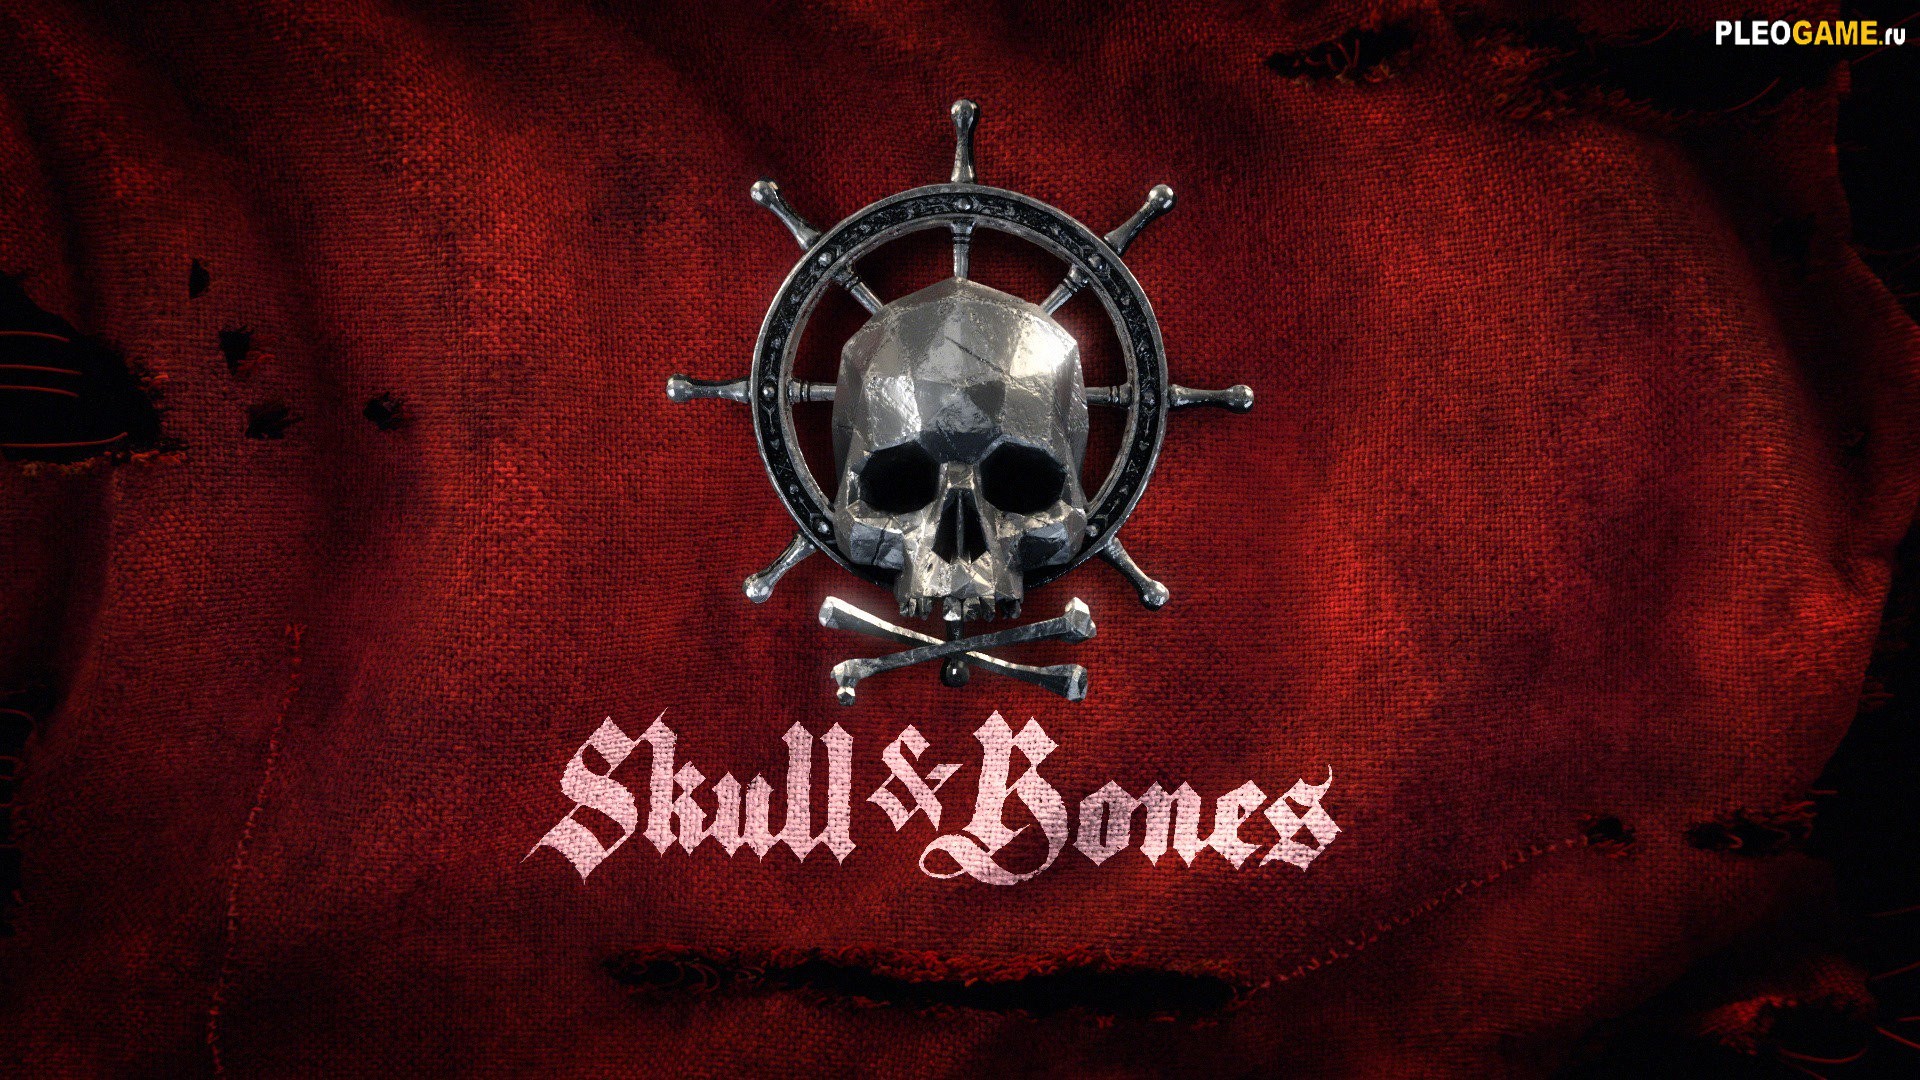    Skull and Bones  E3.    